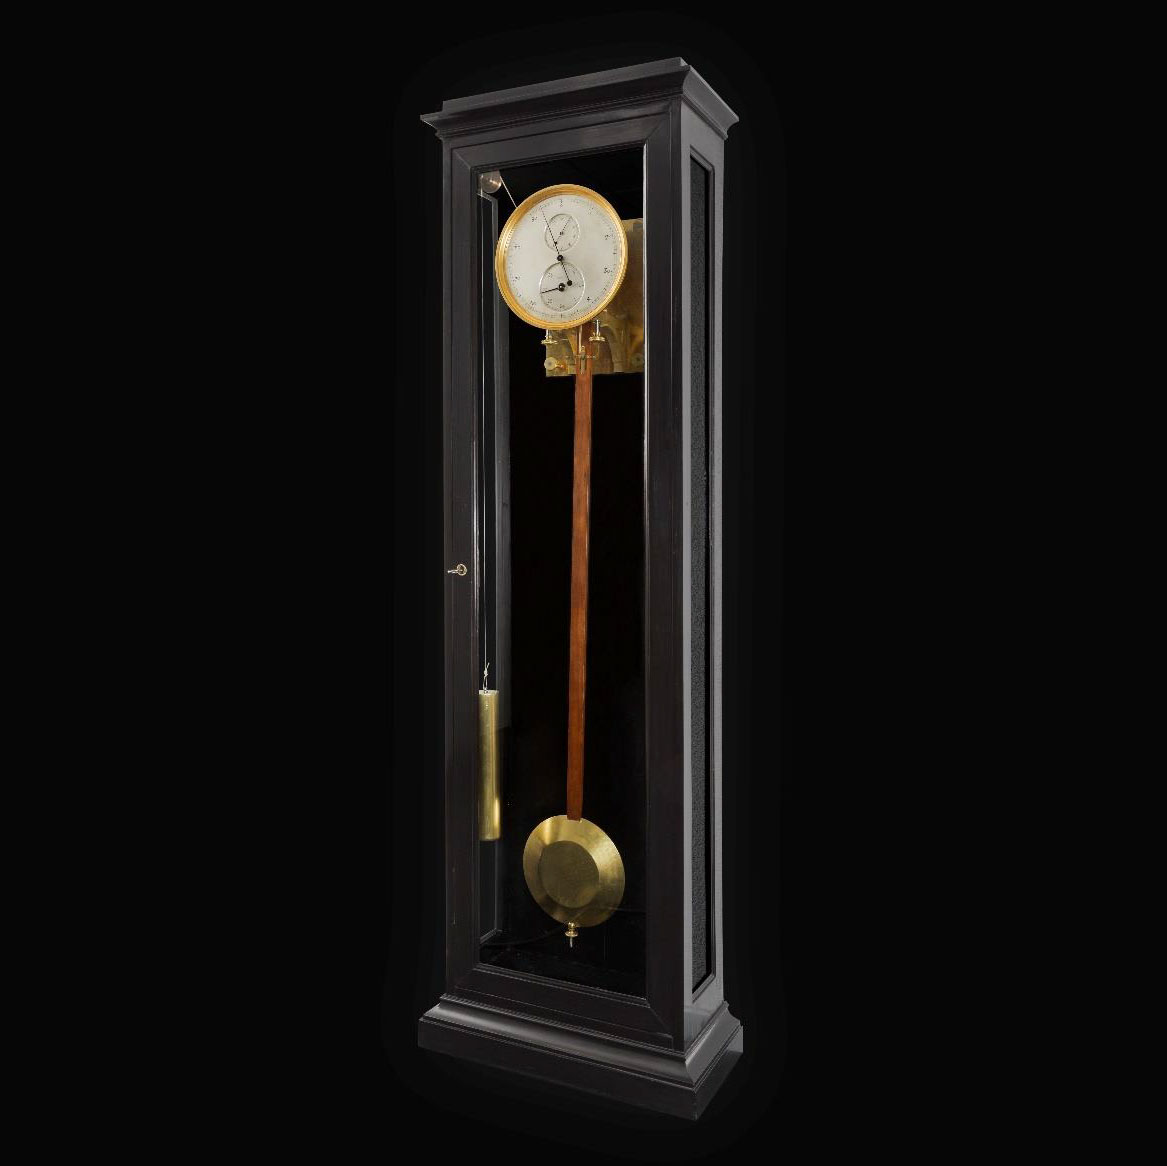 Nineteenth-century pendulum clock made by Gustave Sandoz